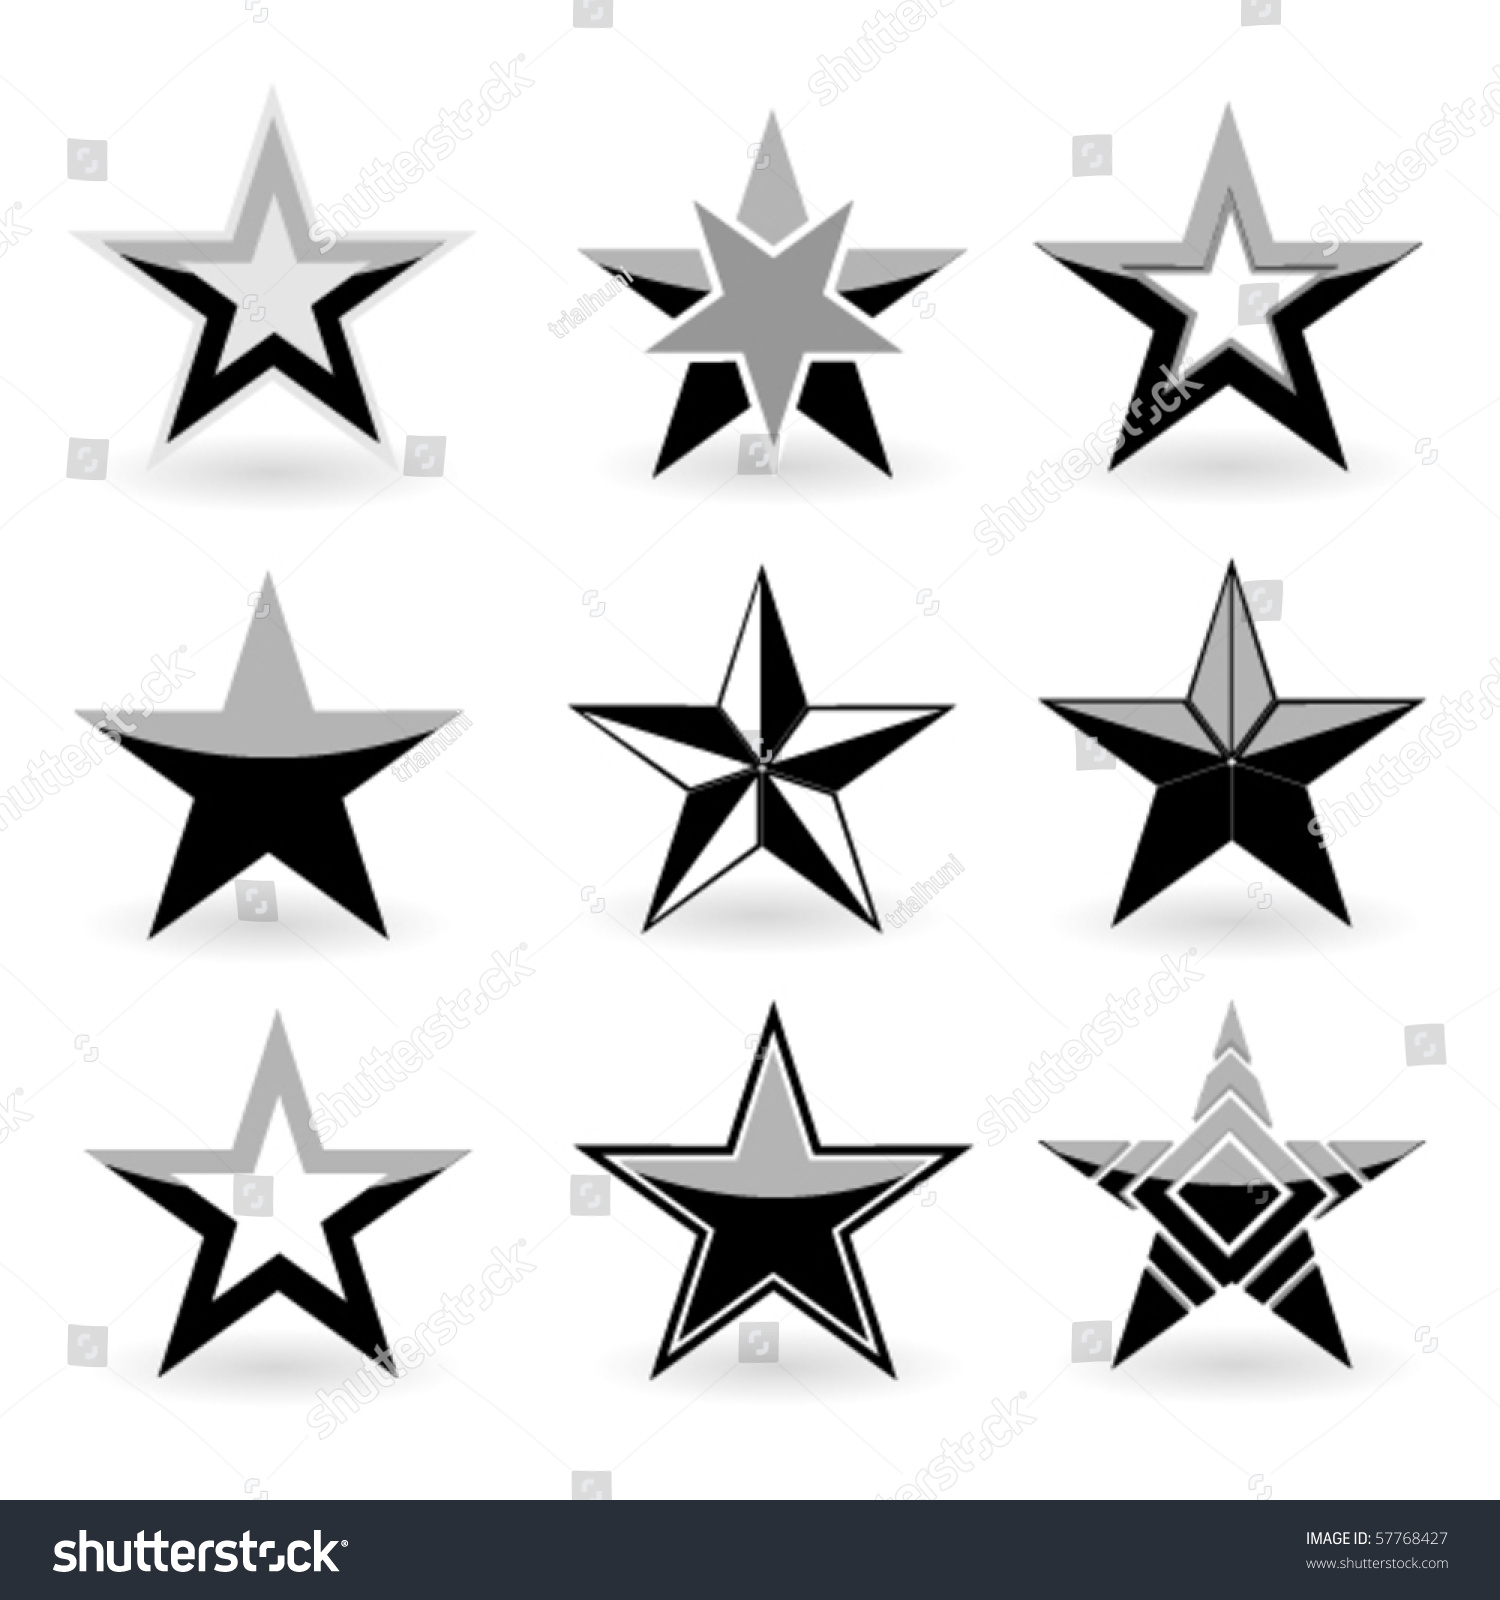 Black Vector Star Set - 57768427 : Shutterstock